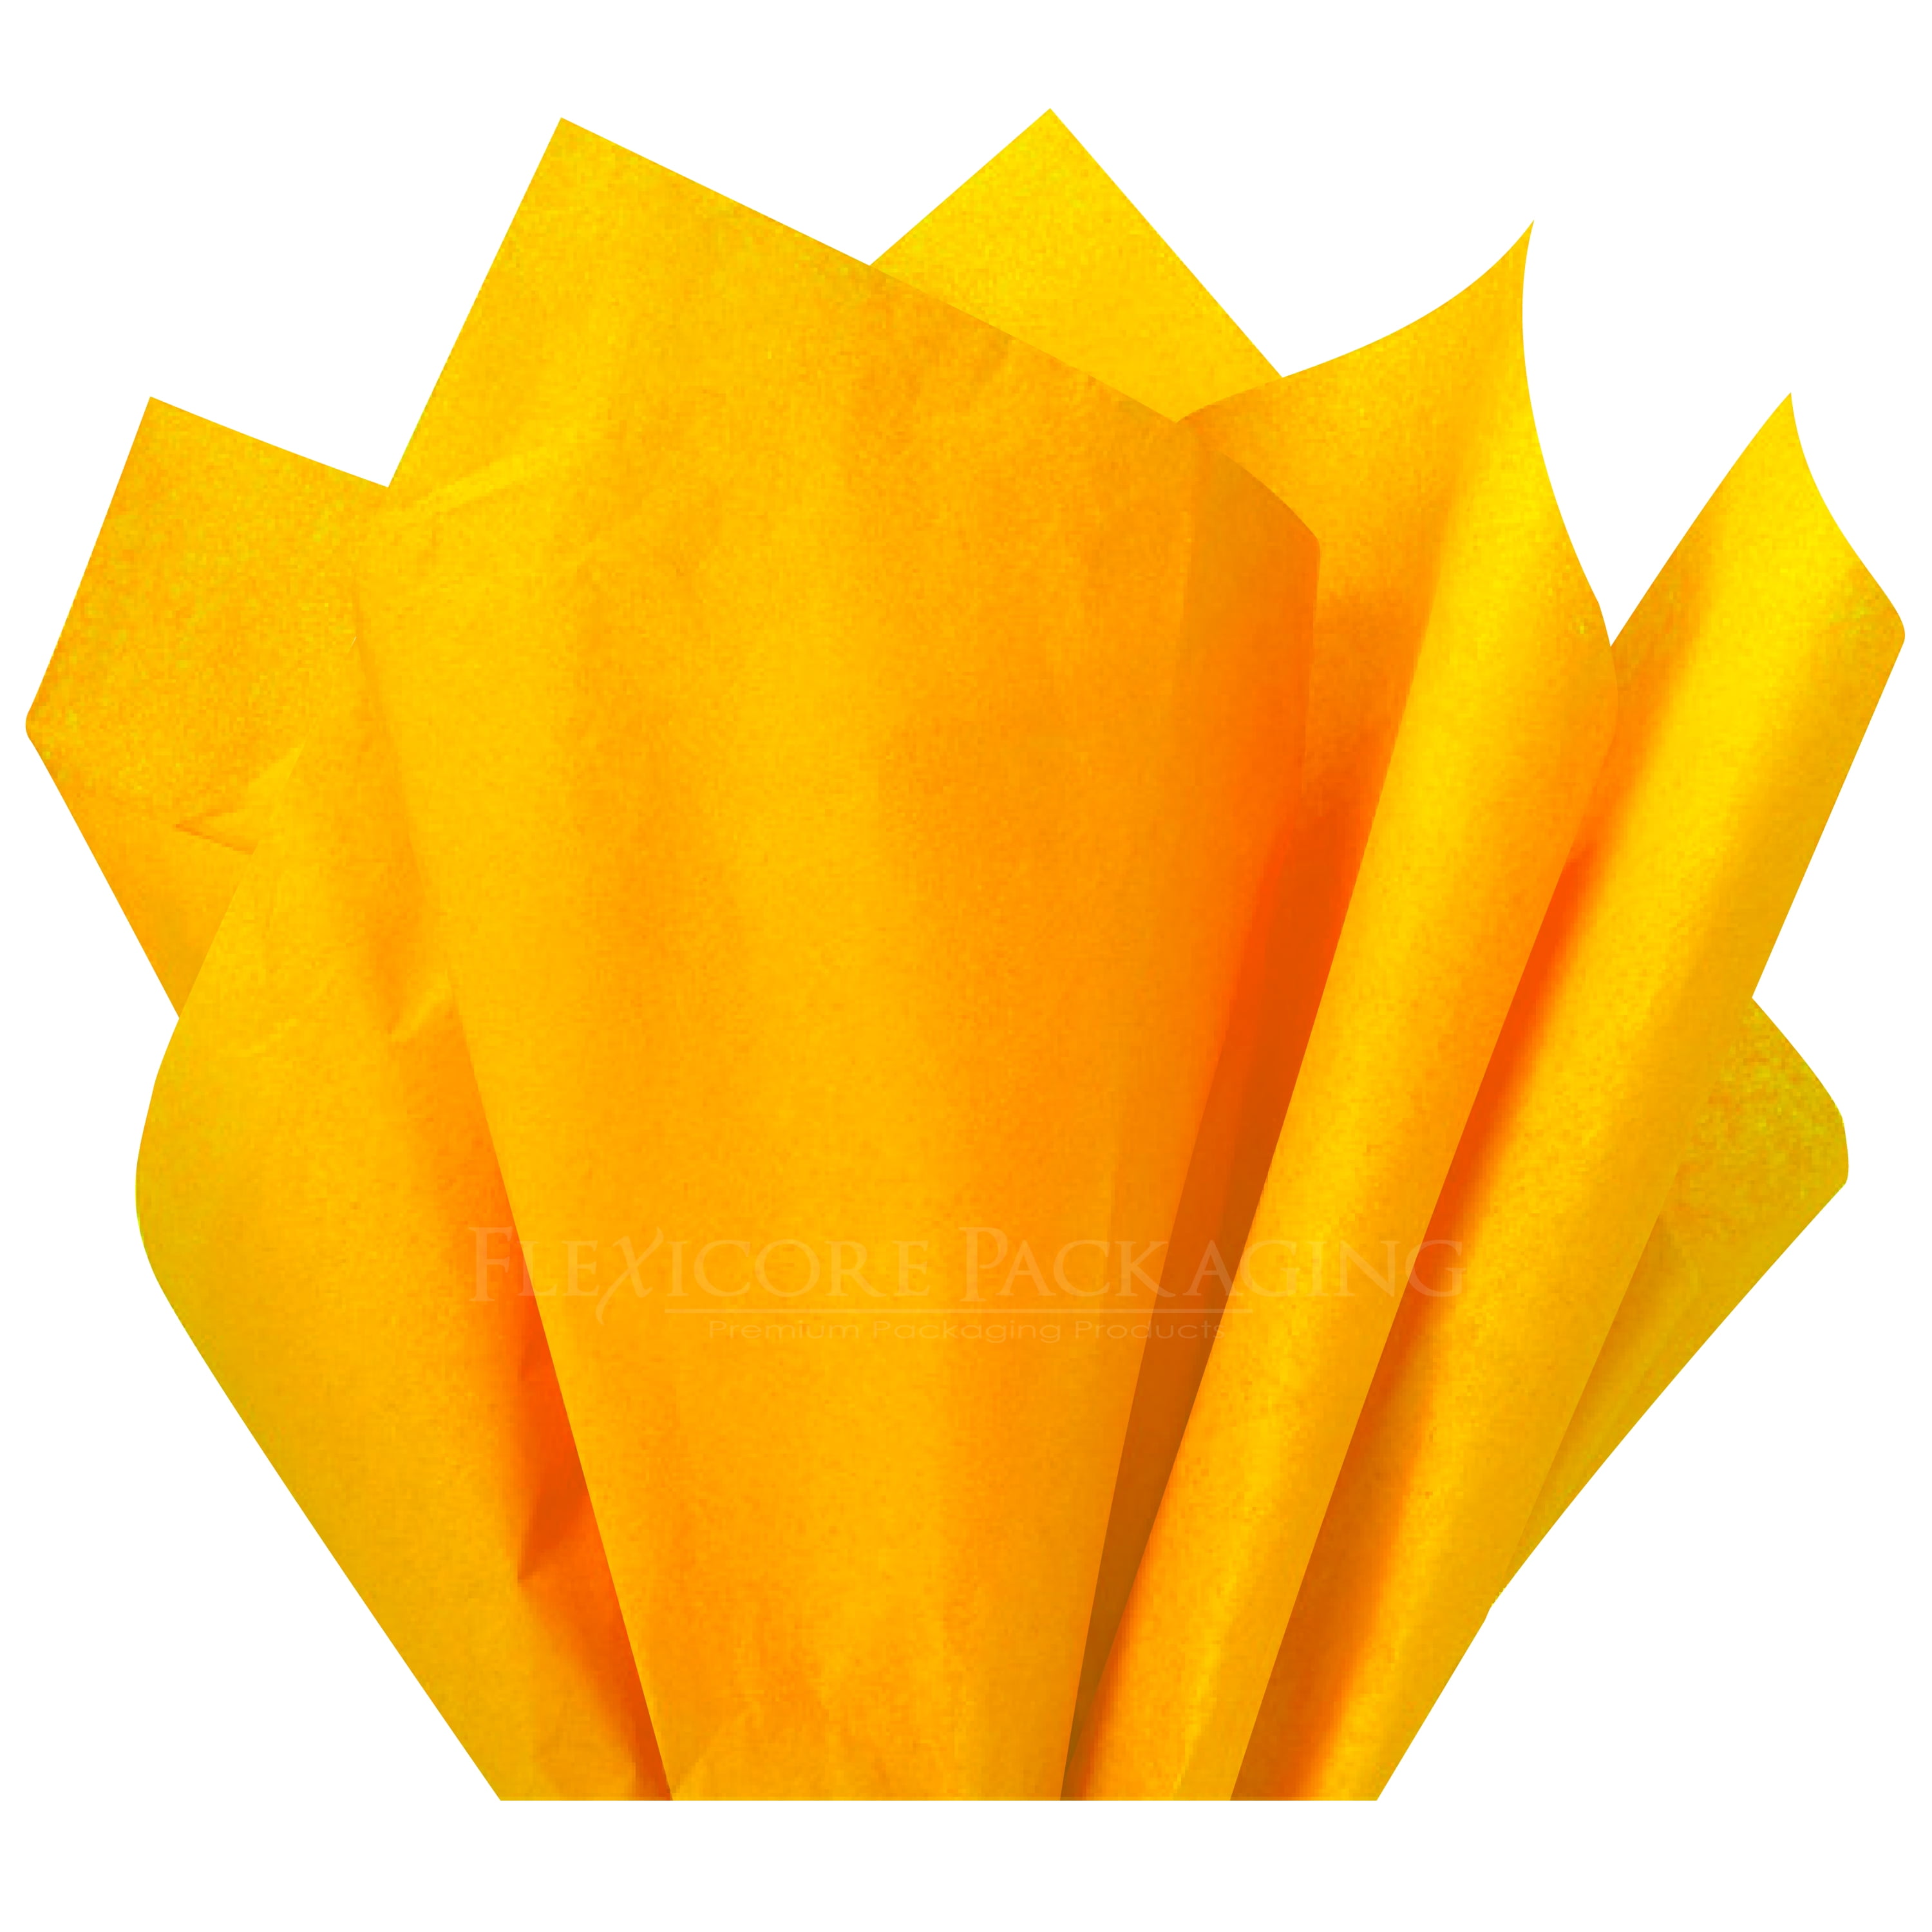 Goldenrod Dark Yellow Gold Bulk Tissue Paper 15 inch x 20 inch - 100 Sheets